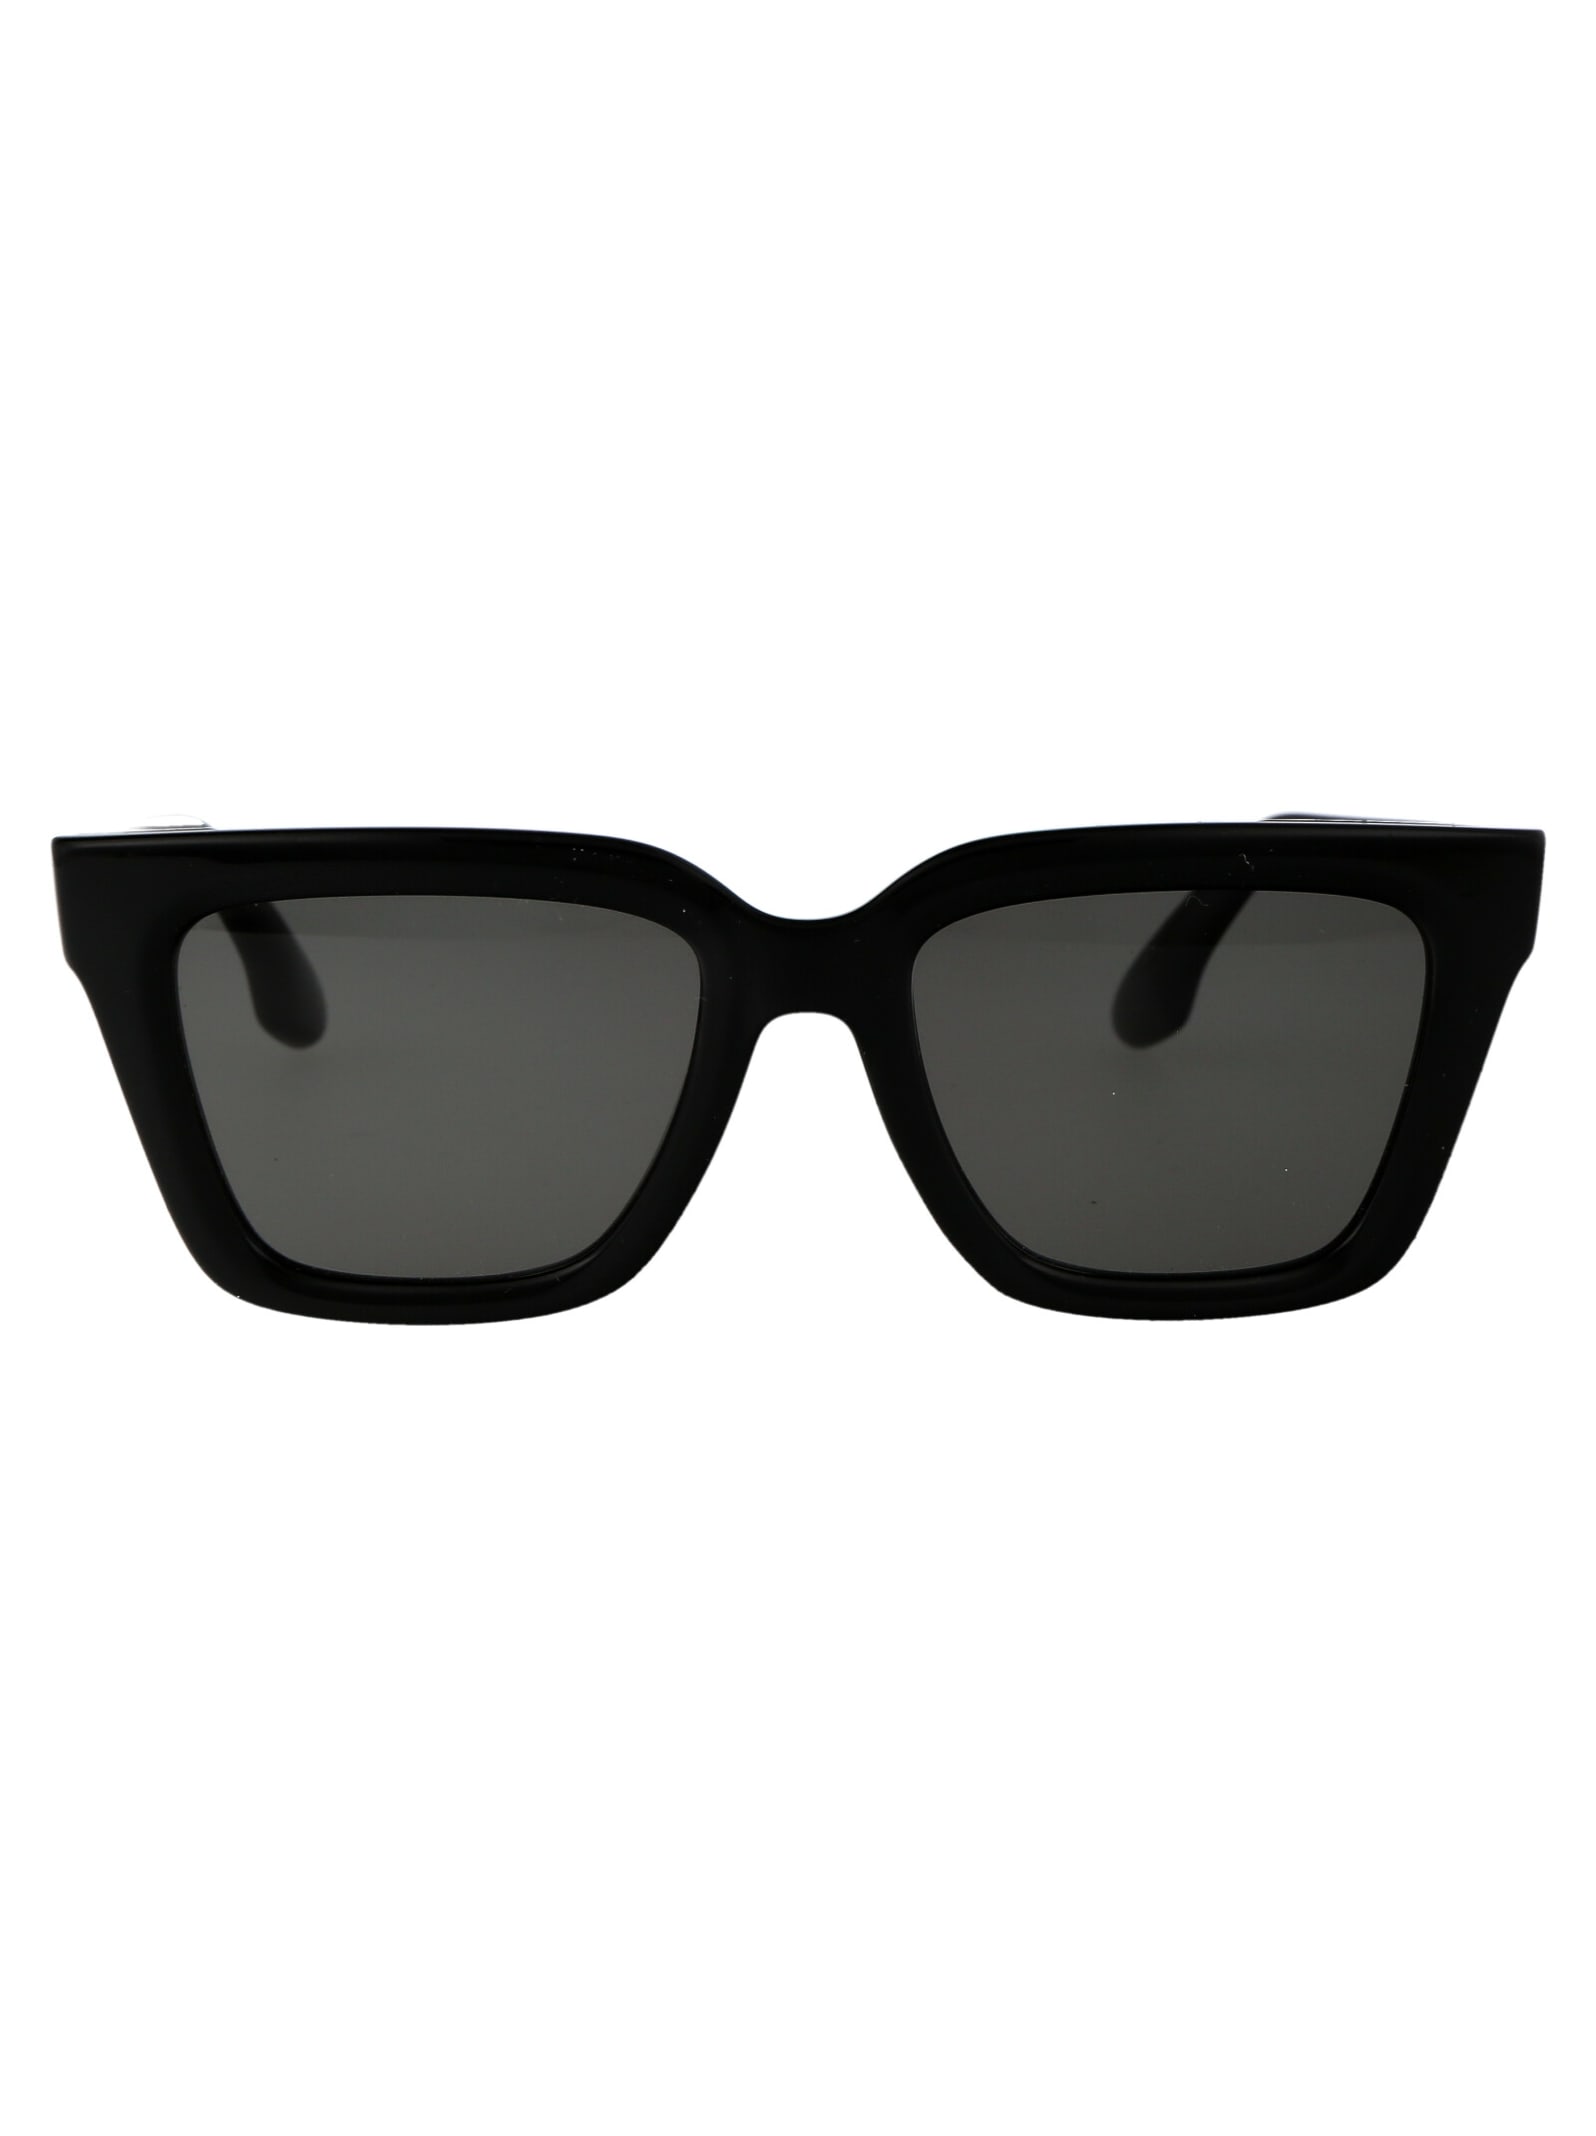 Victoria Beckham Vb644s Sunglasses In 001 Black